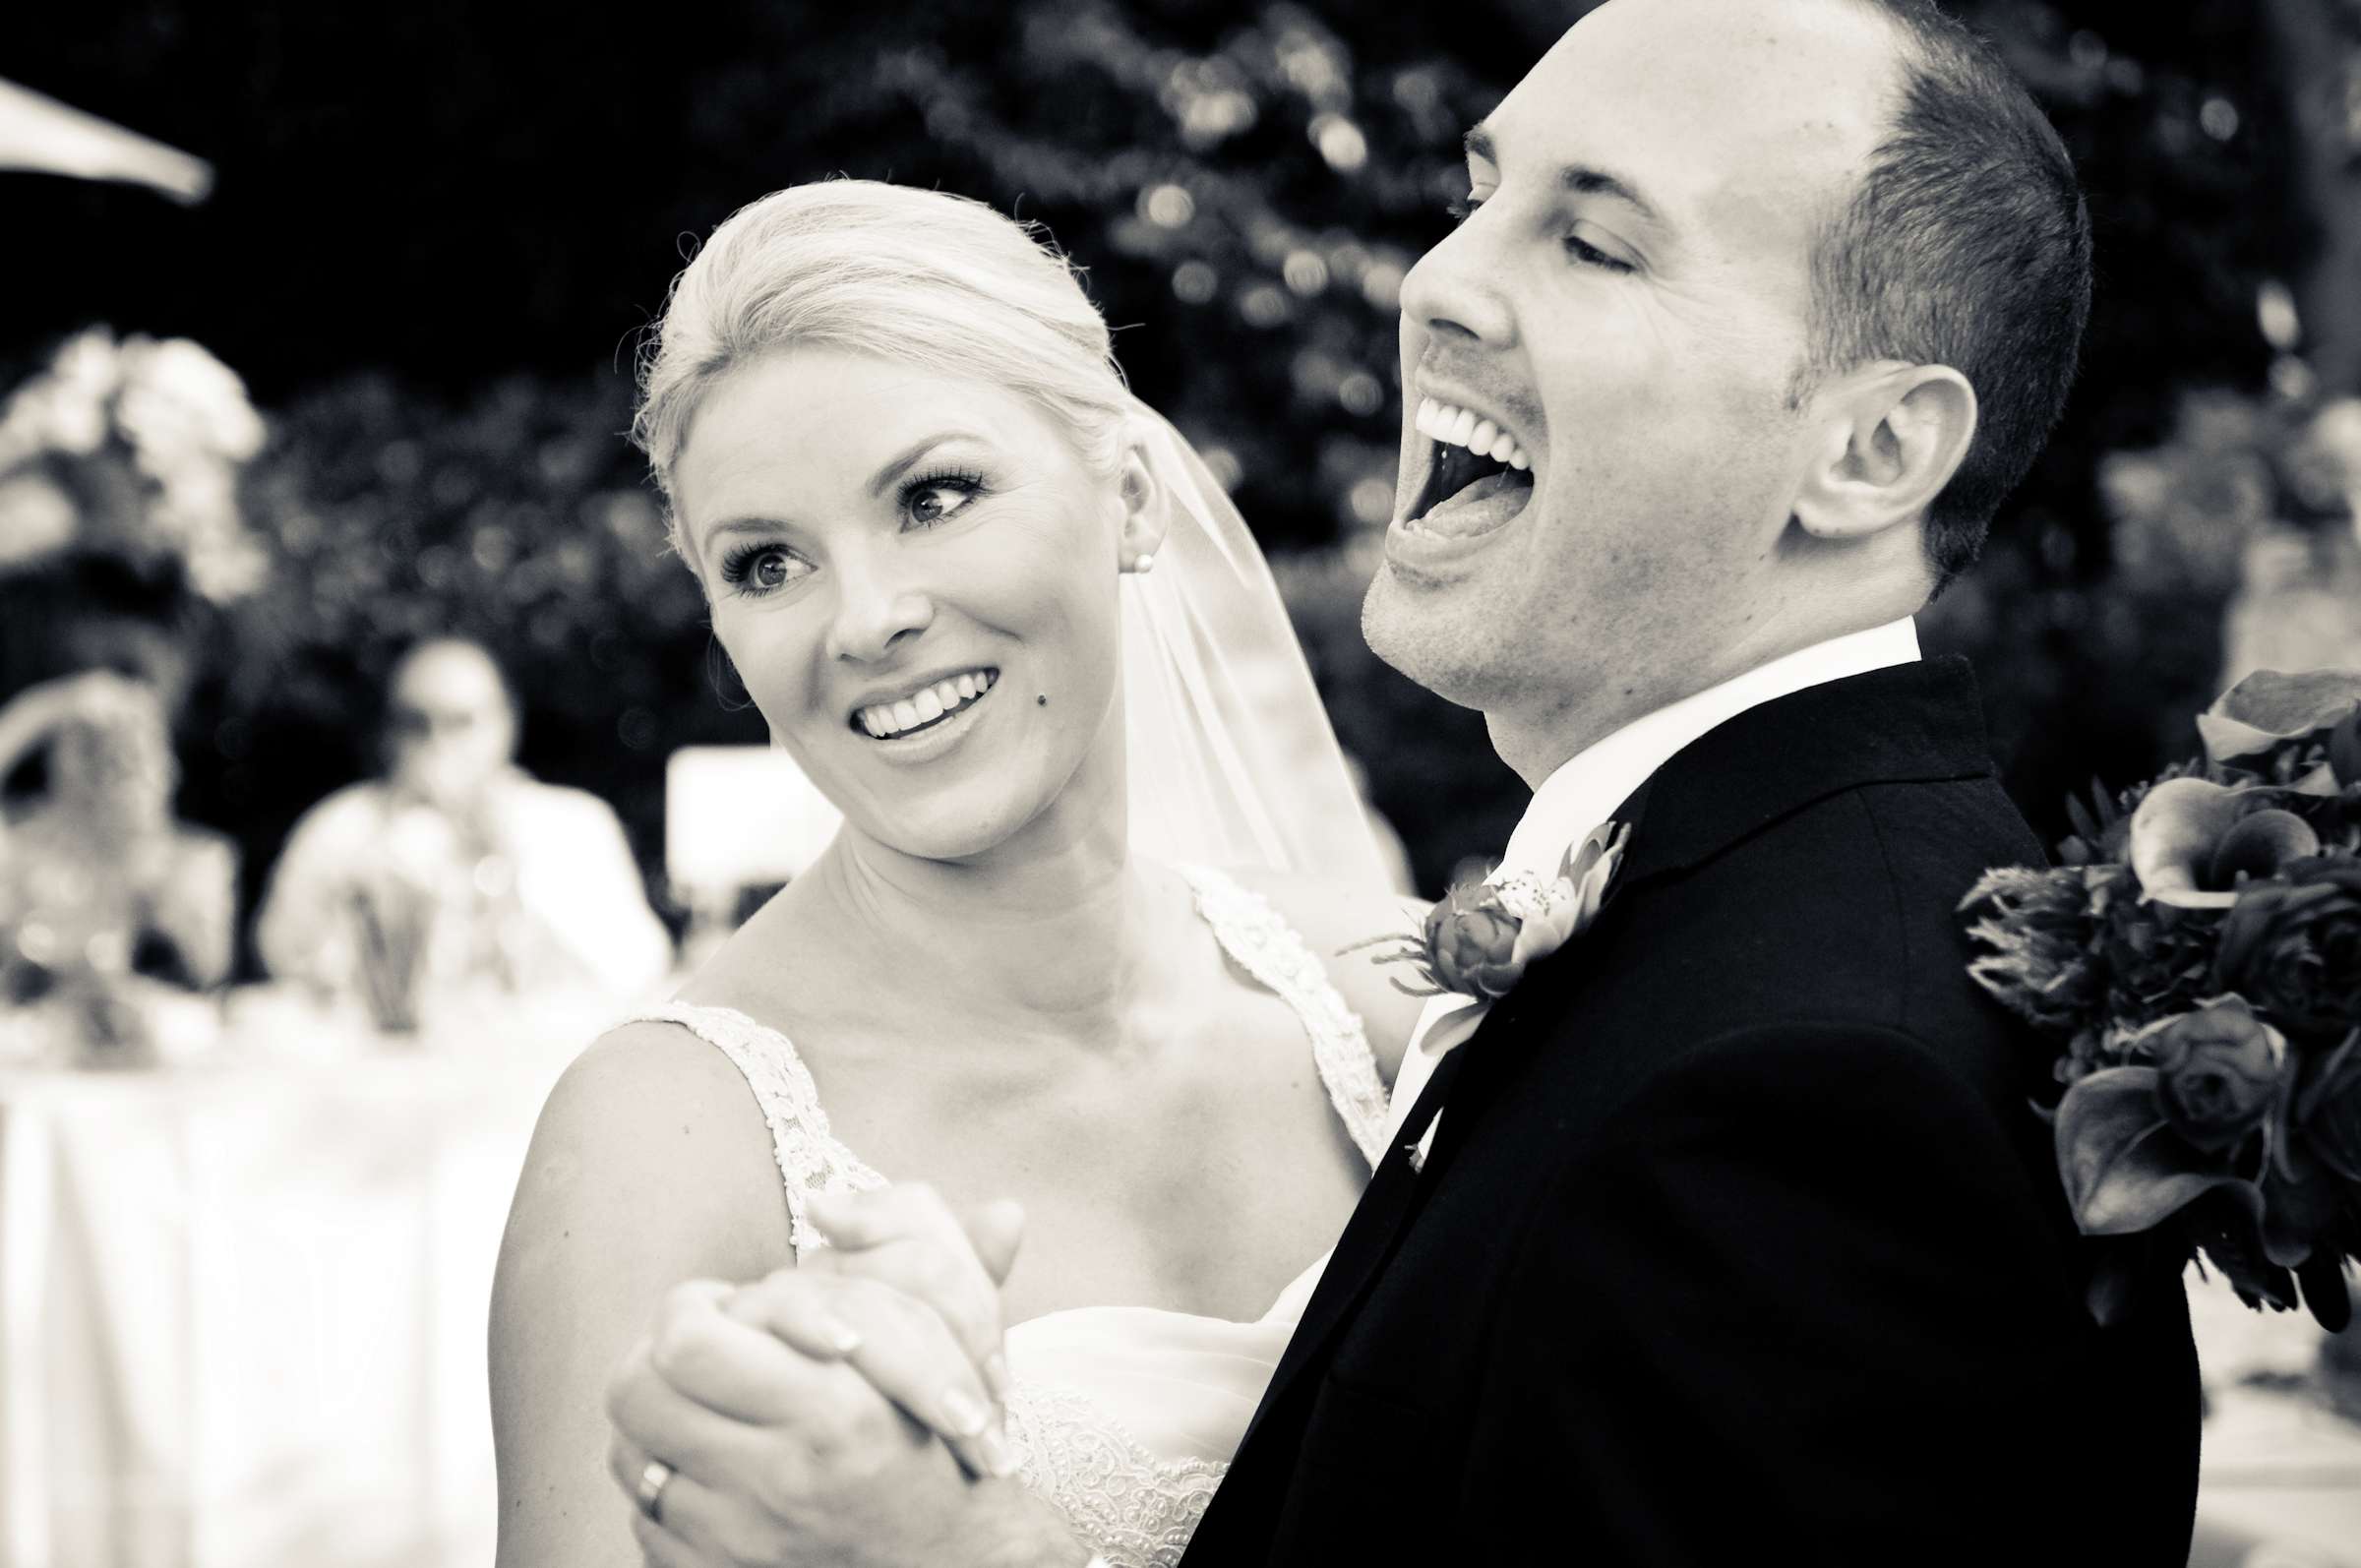 Darlington House Wedding, Victoria and Balazs Wedding Photo #8 by True Photography